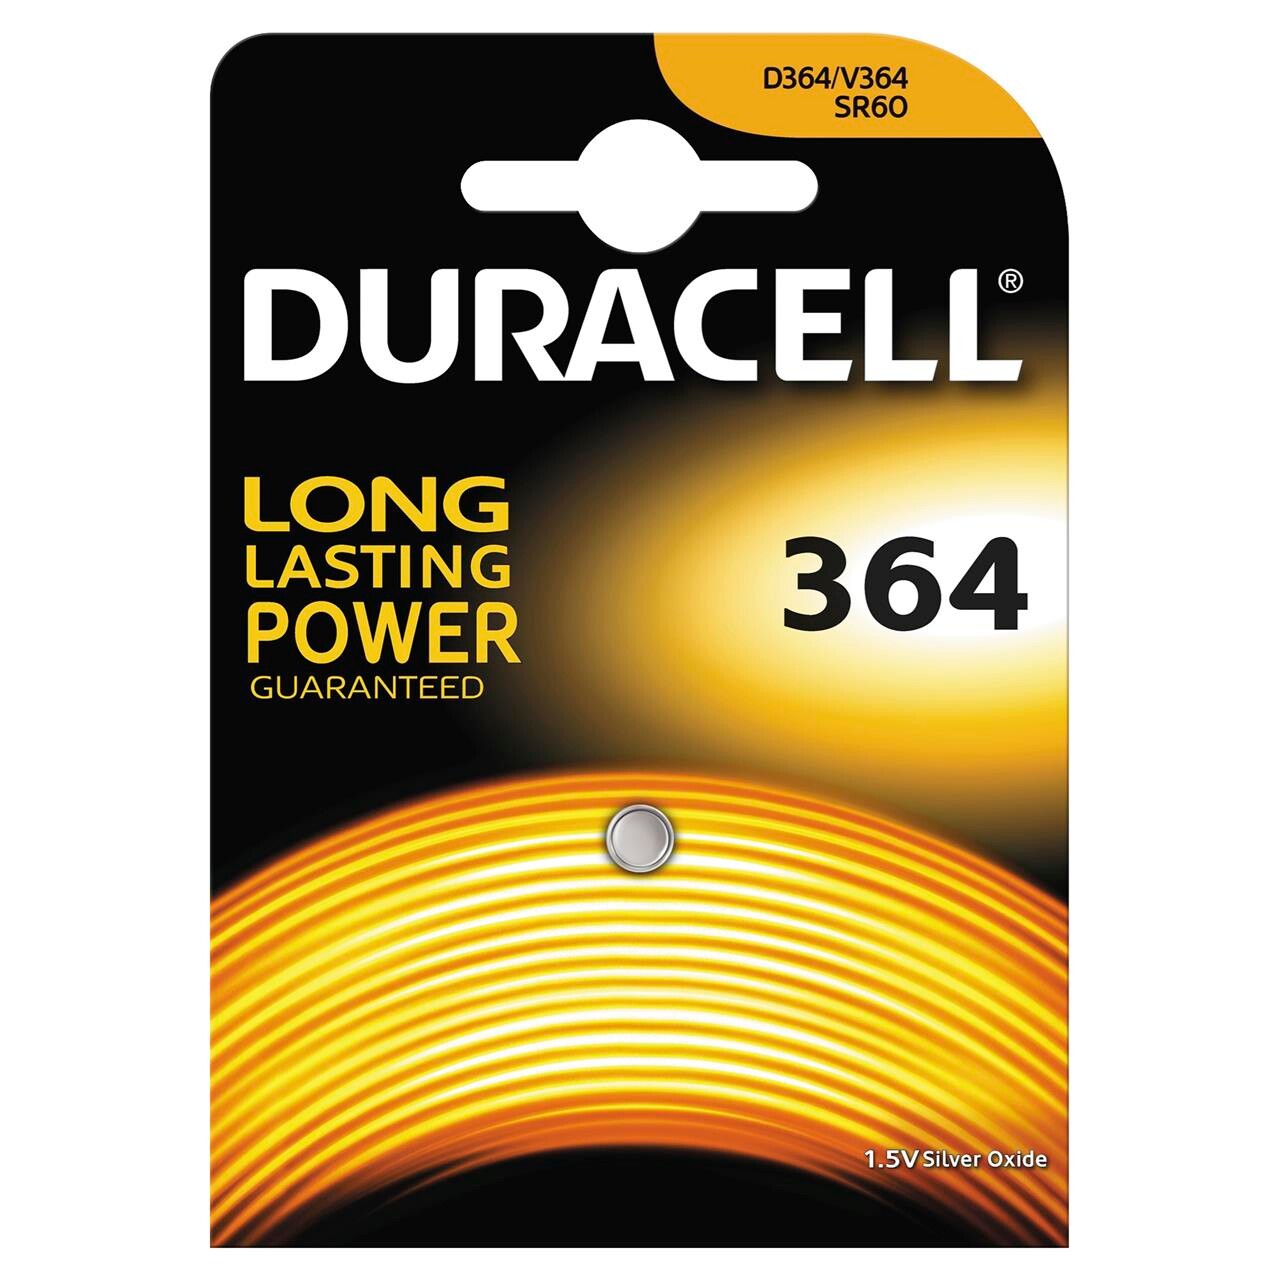 Duracell batteri 364, 1,5V Silver Oxide 1stk/pak